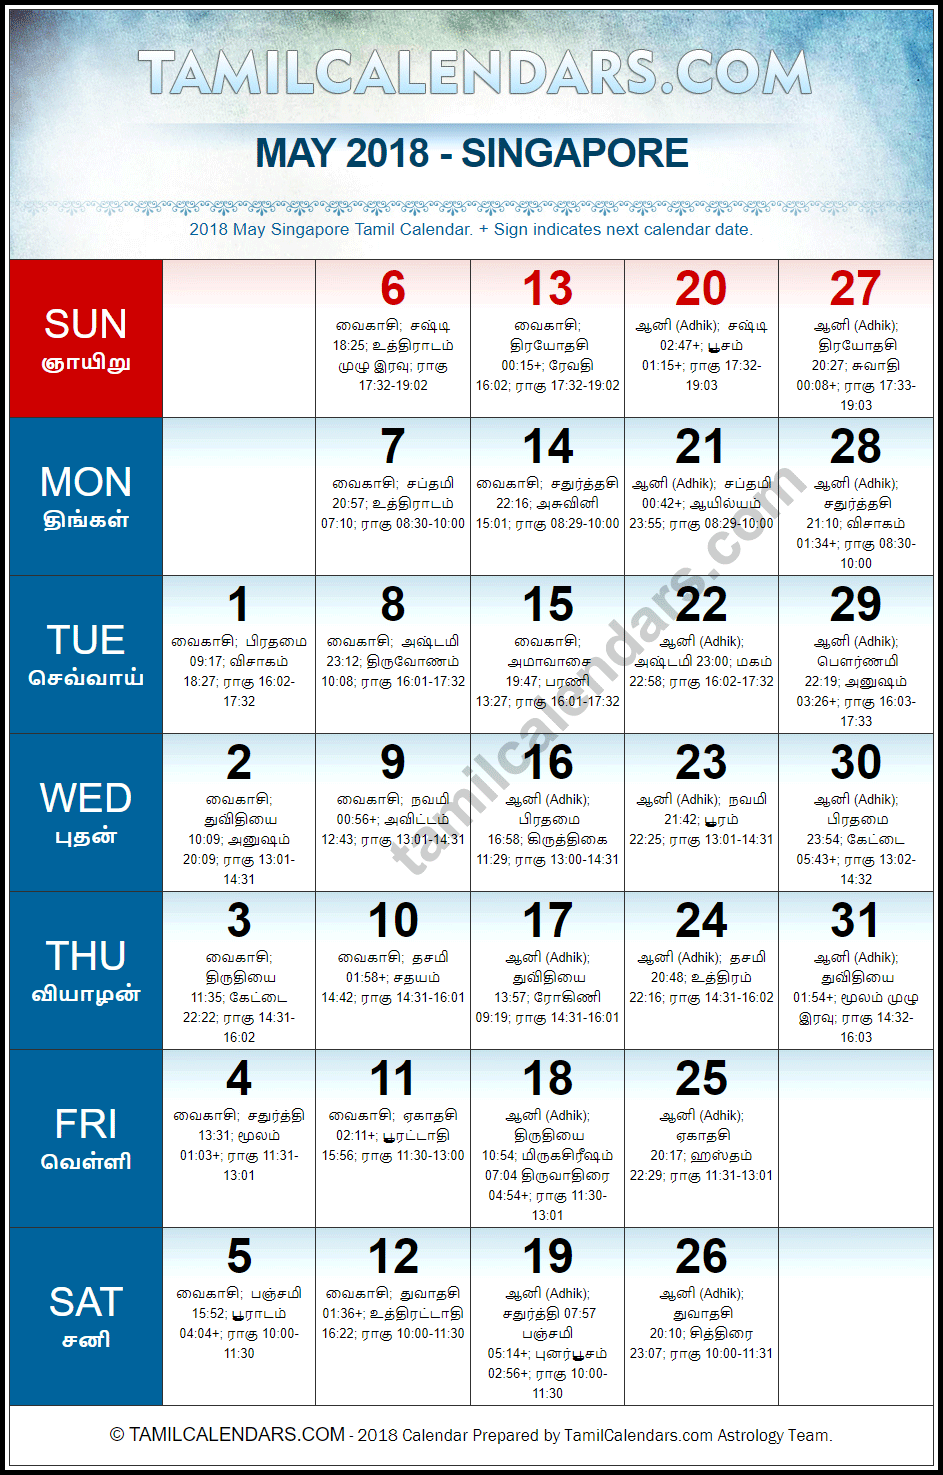 May 2018 Tamil Calendar for Singapore